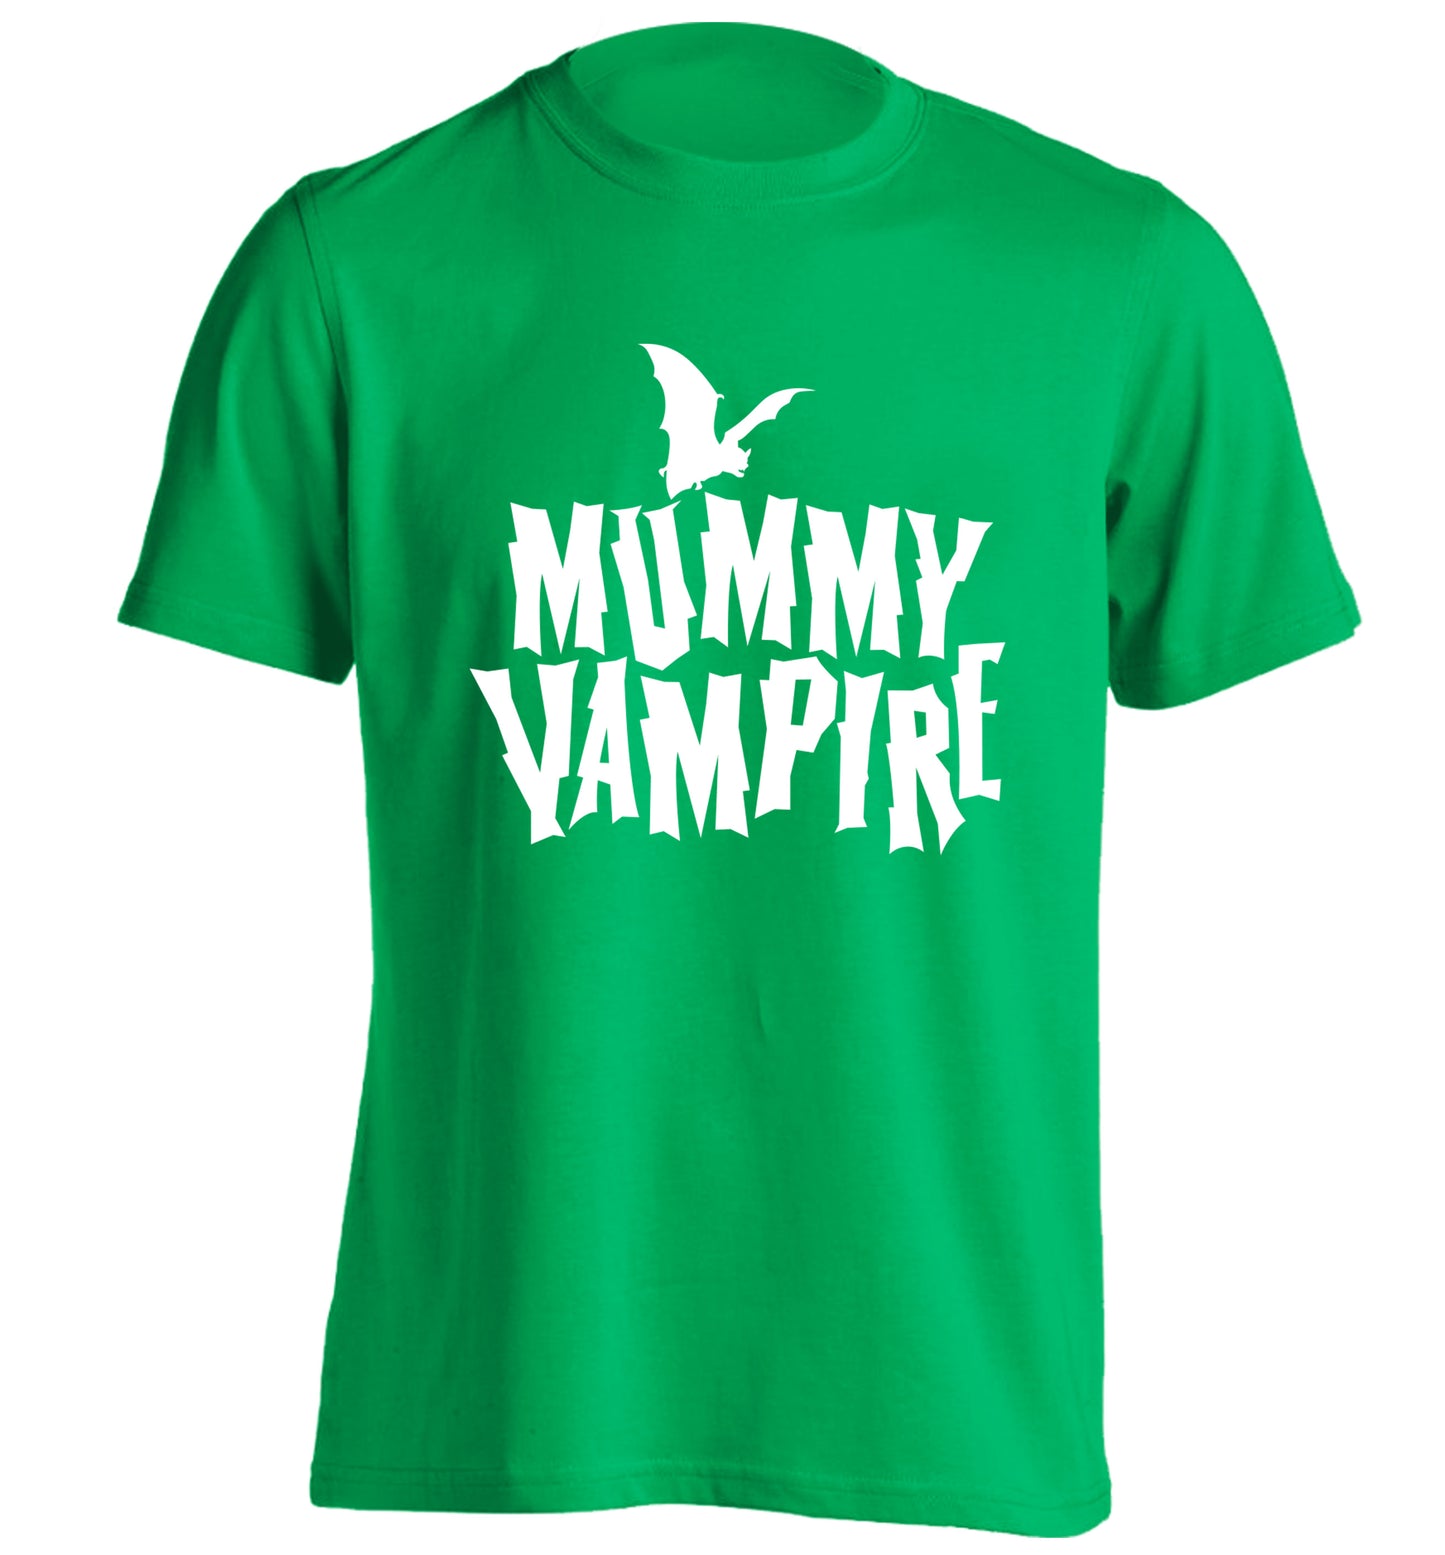 Mummy vampire adults unisex green Tshirt 2XL